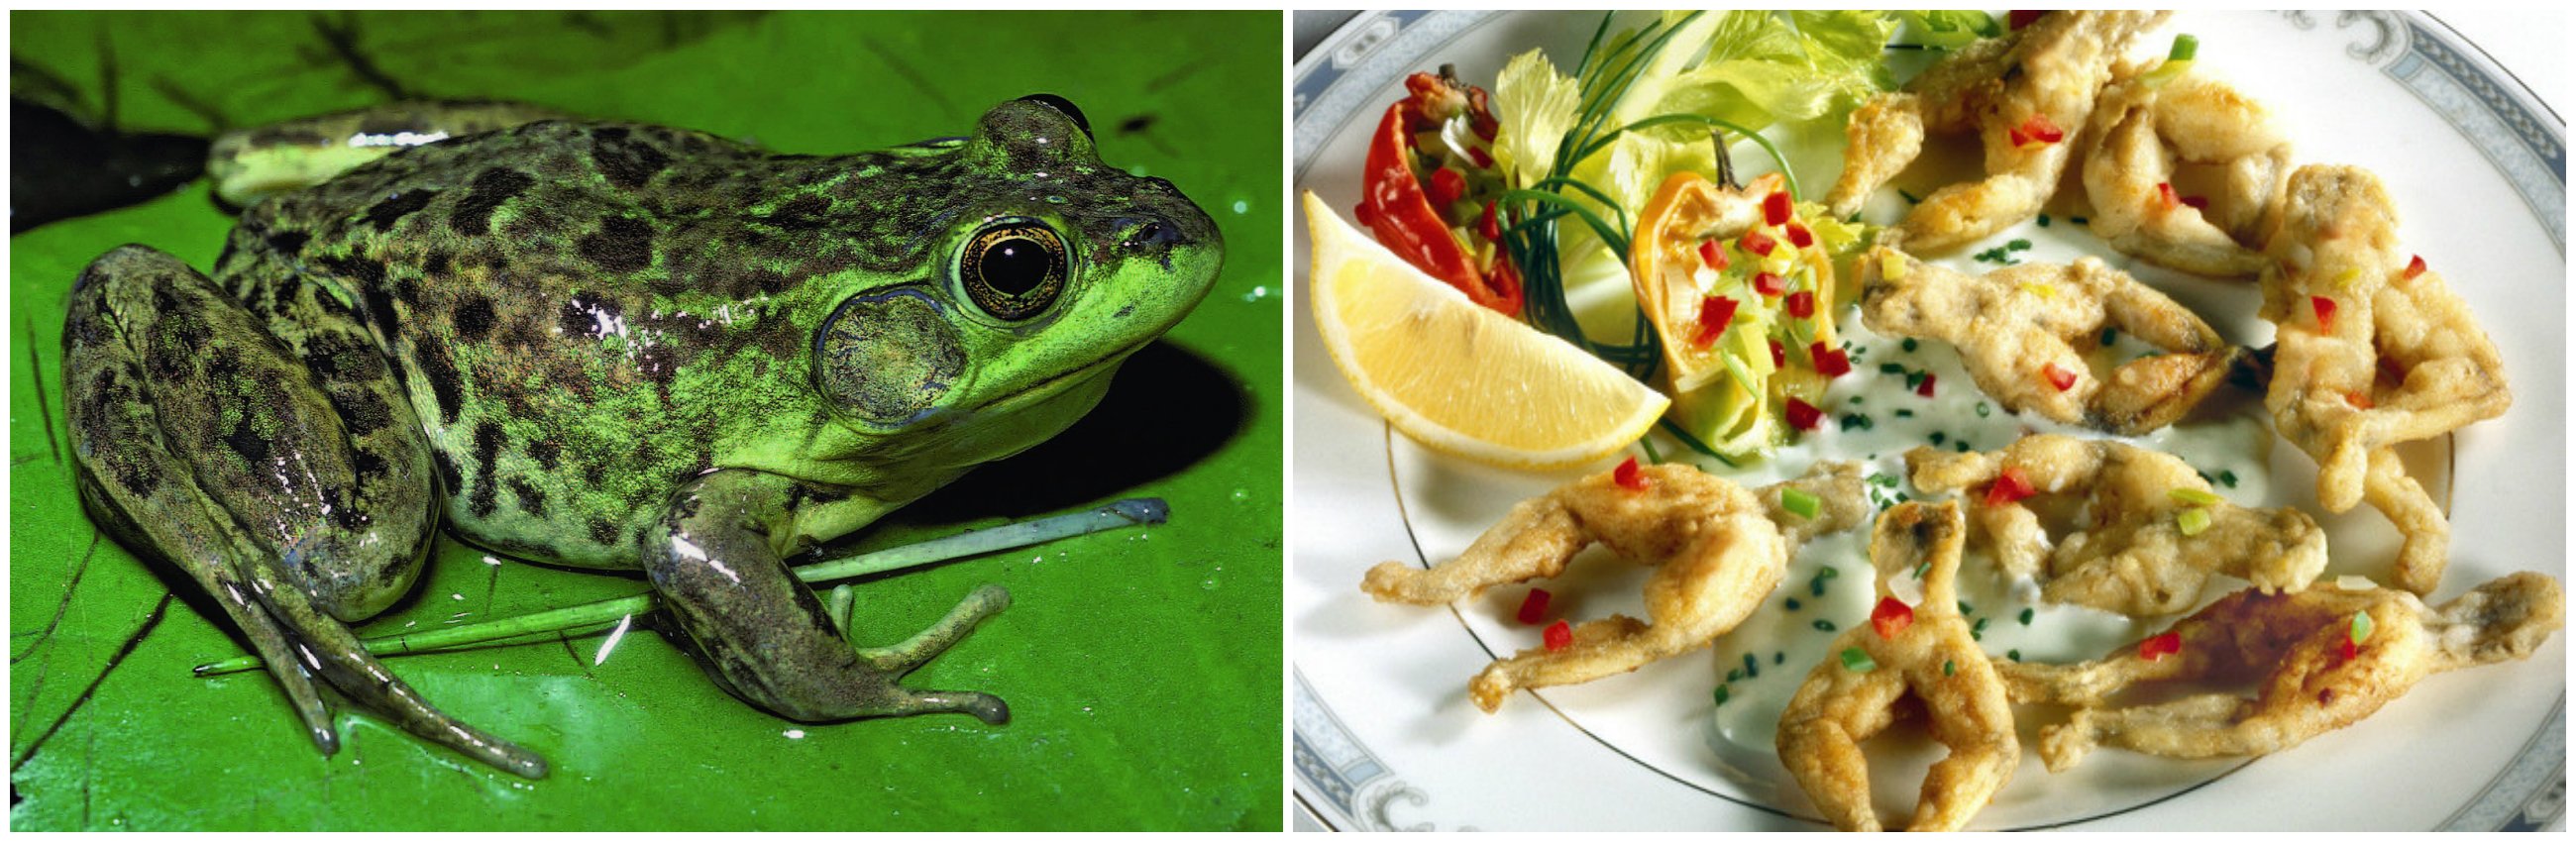 Какой вид лягушек едят. Лягушачьи лапки во Франции. Французские лягушки для еды. Приготовленная лягушка.